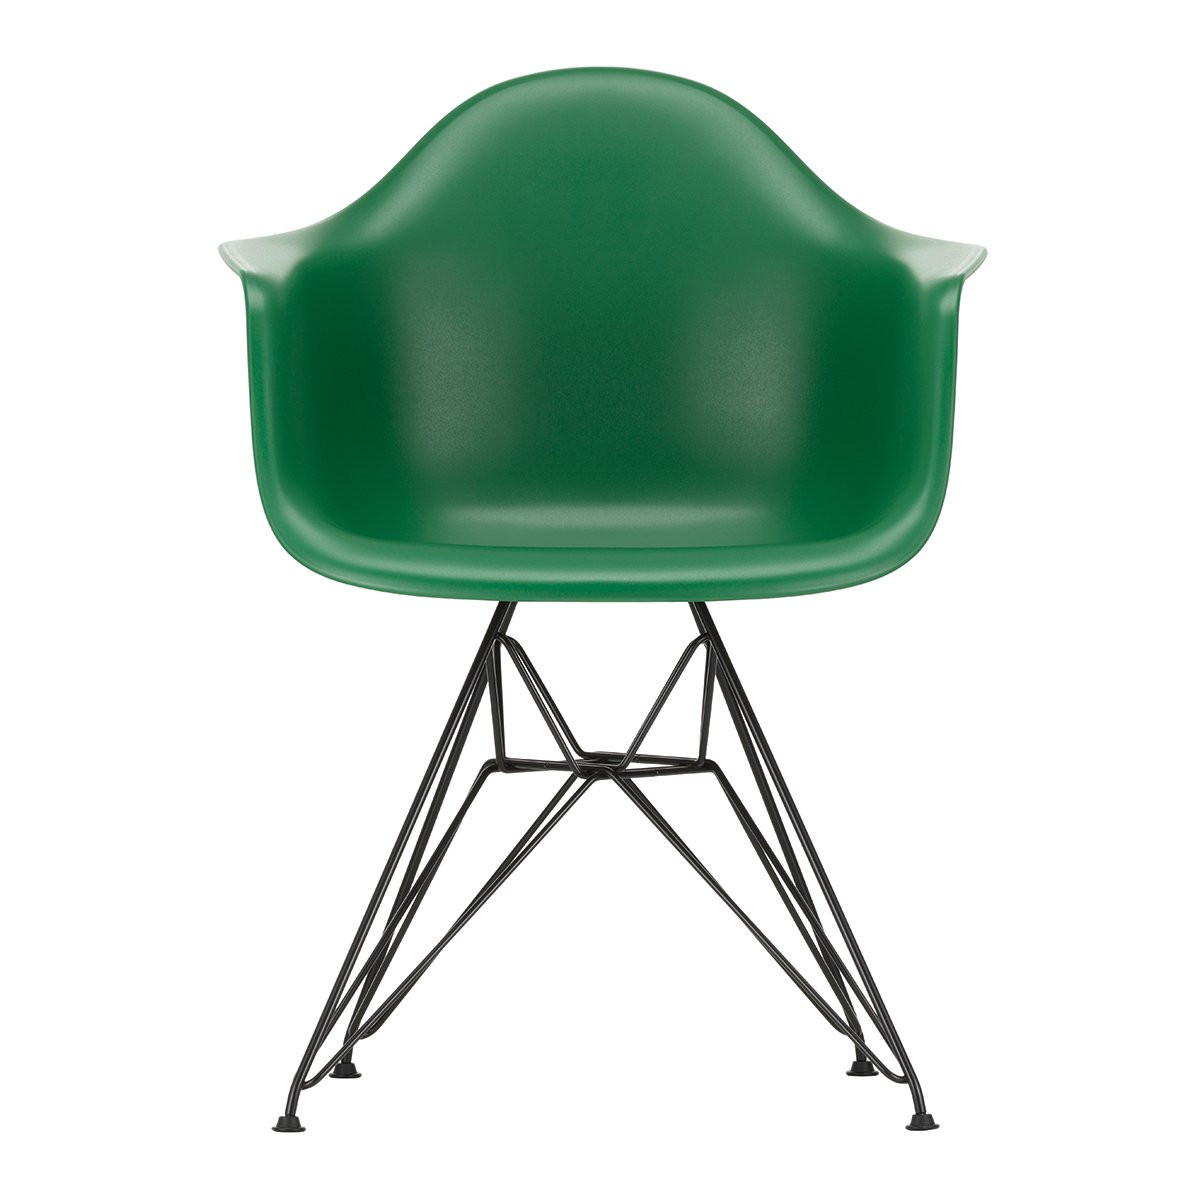 Vitra Eames Plastic Chair DAR Zwart - Emerald Green